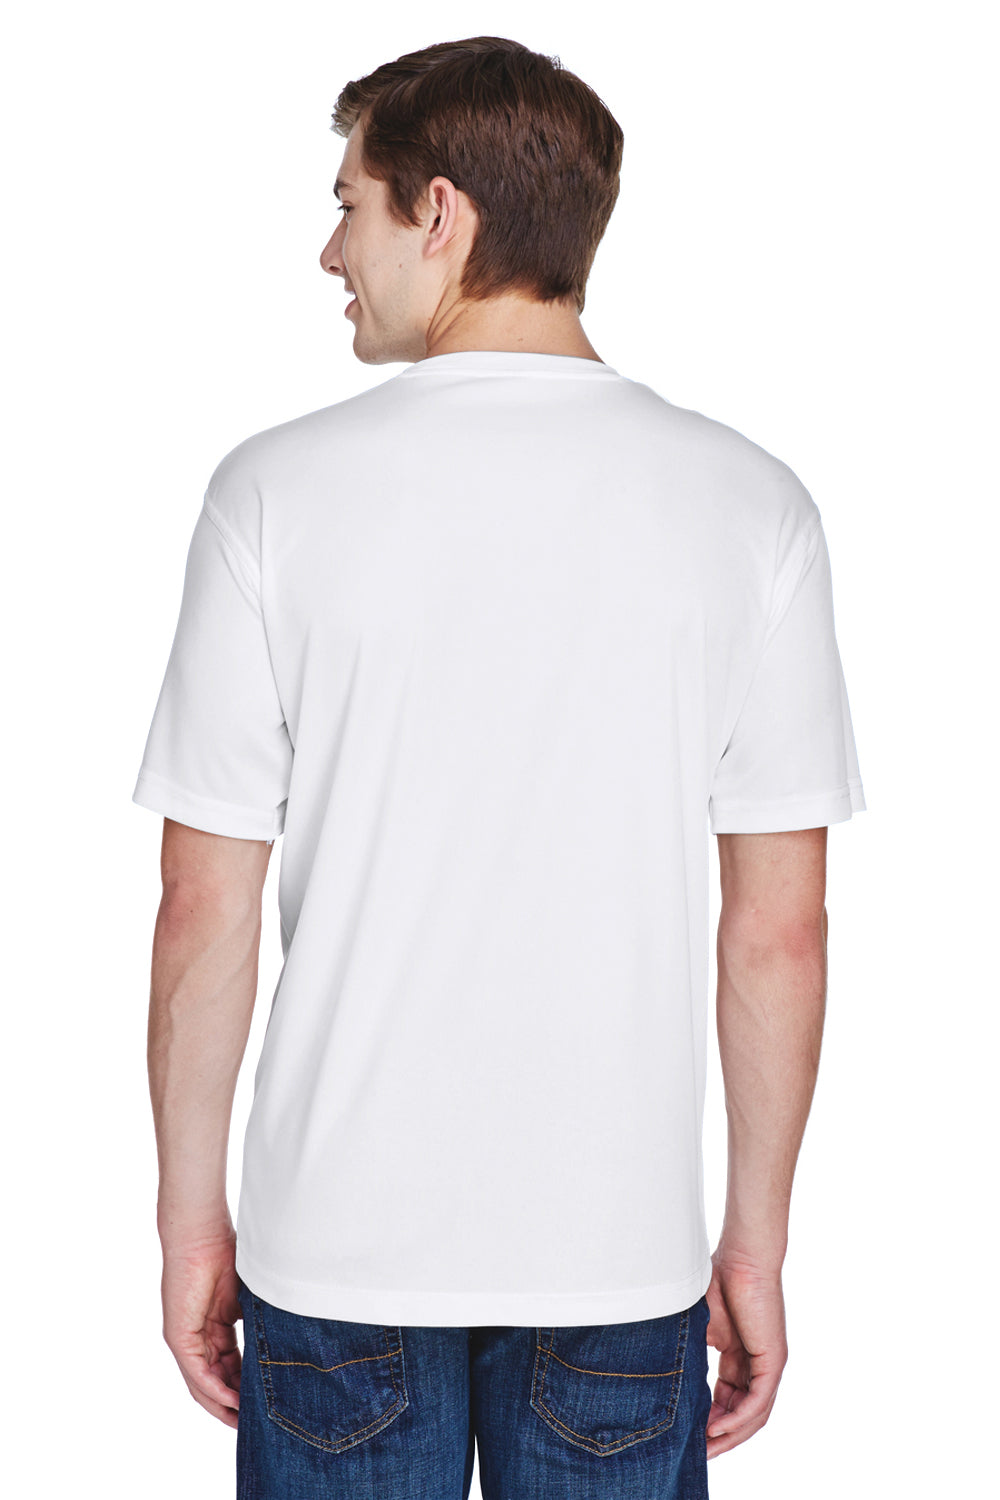 UltraClub 8620 Mens Cool & Dry Performance Moisture Wicking Short Sleeve Crewneck T-Shirt White Back